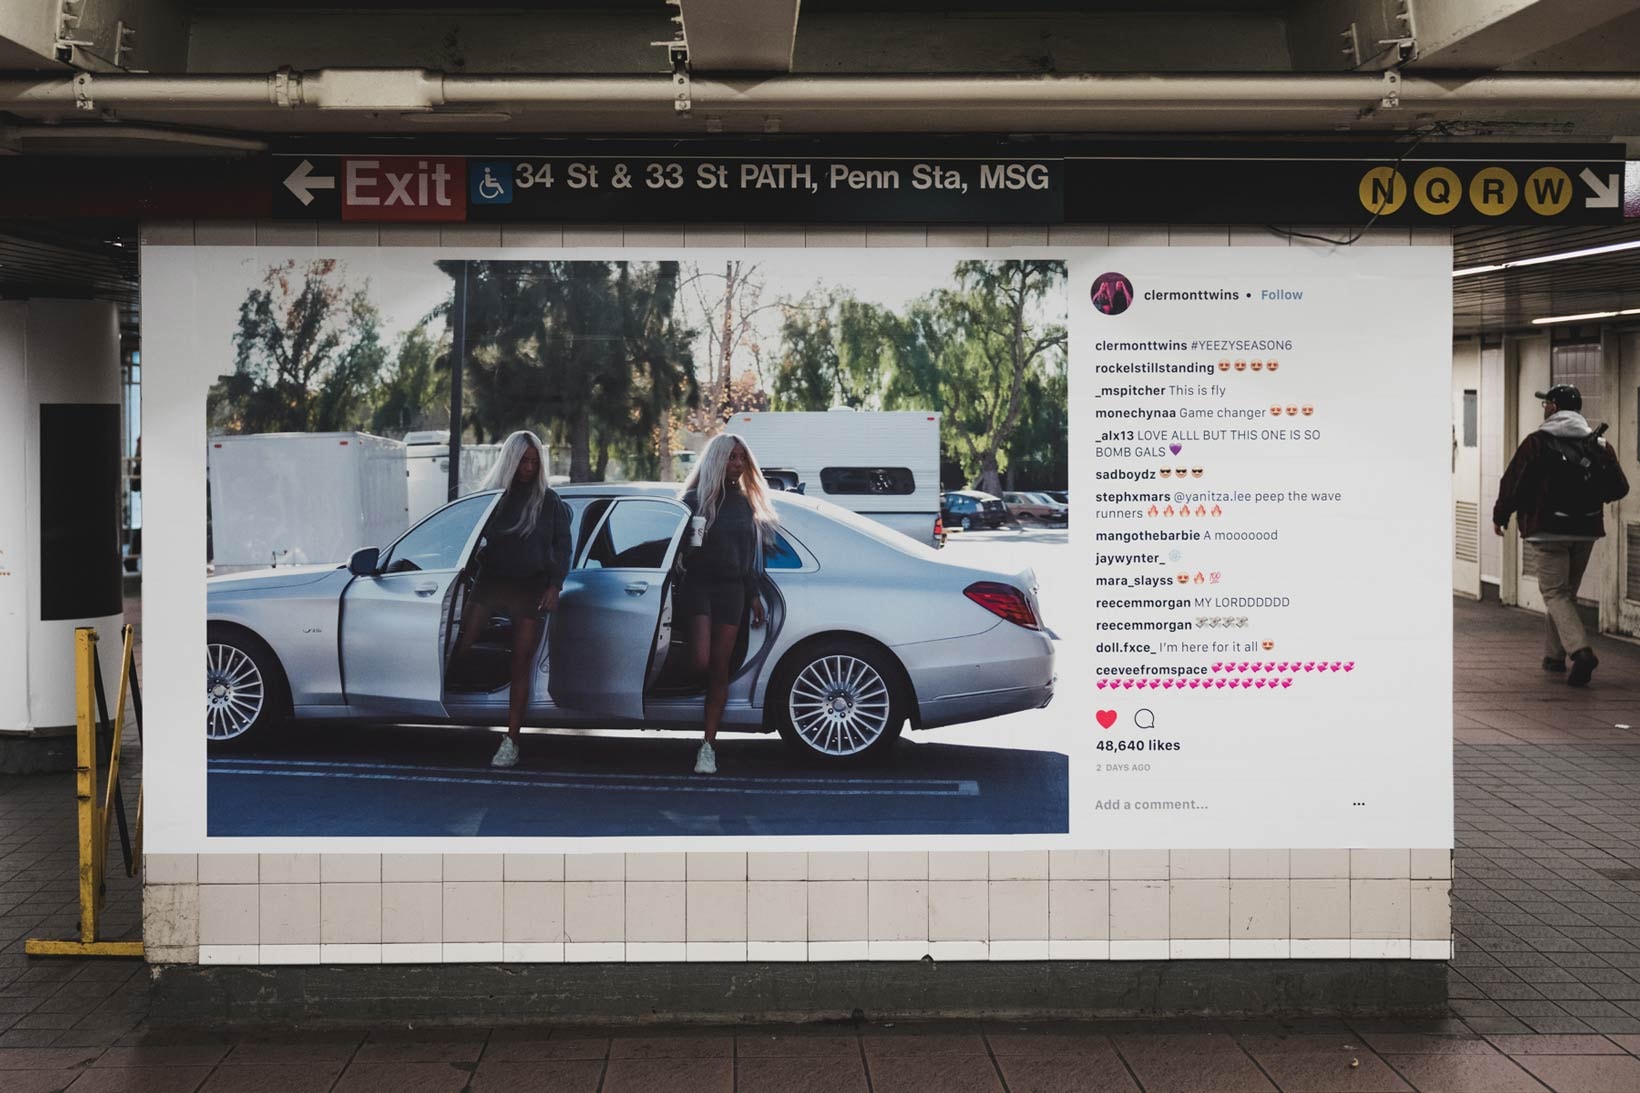 YEEZY Season 6 Ad Campaign New York City Herald Square